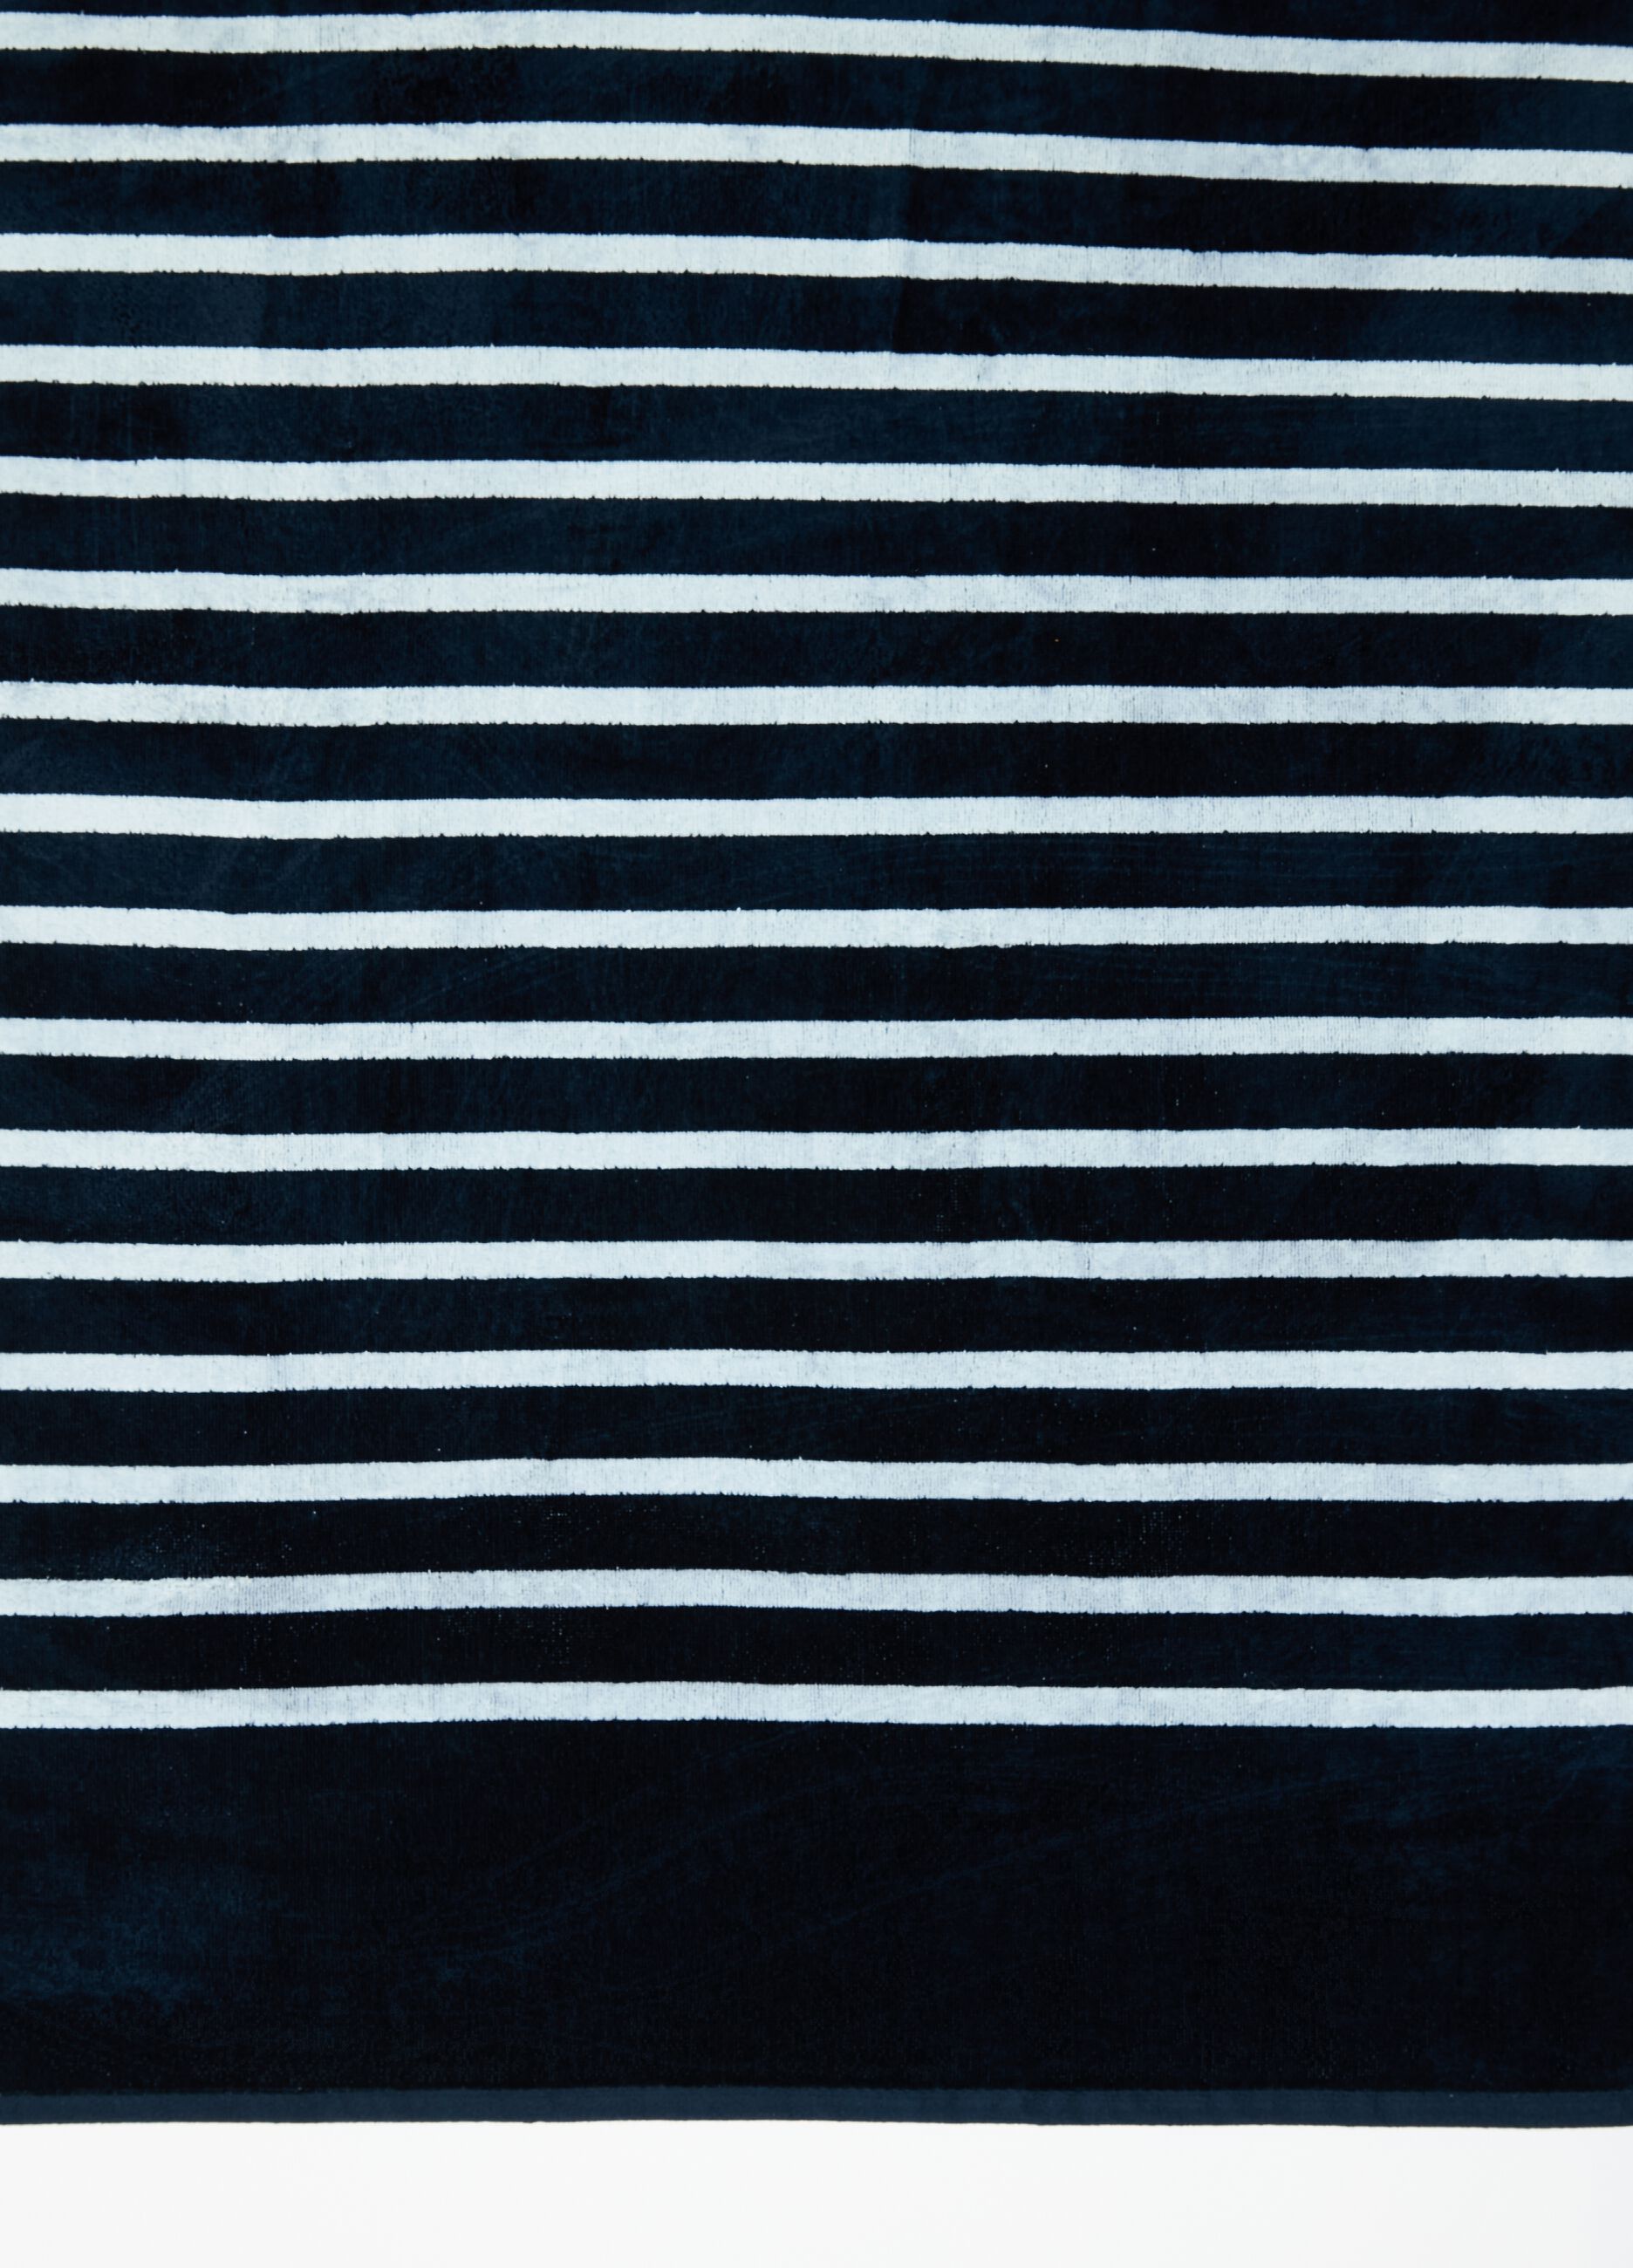 Beach towel with thin striped print